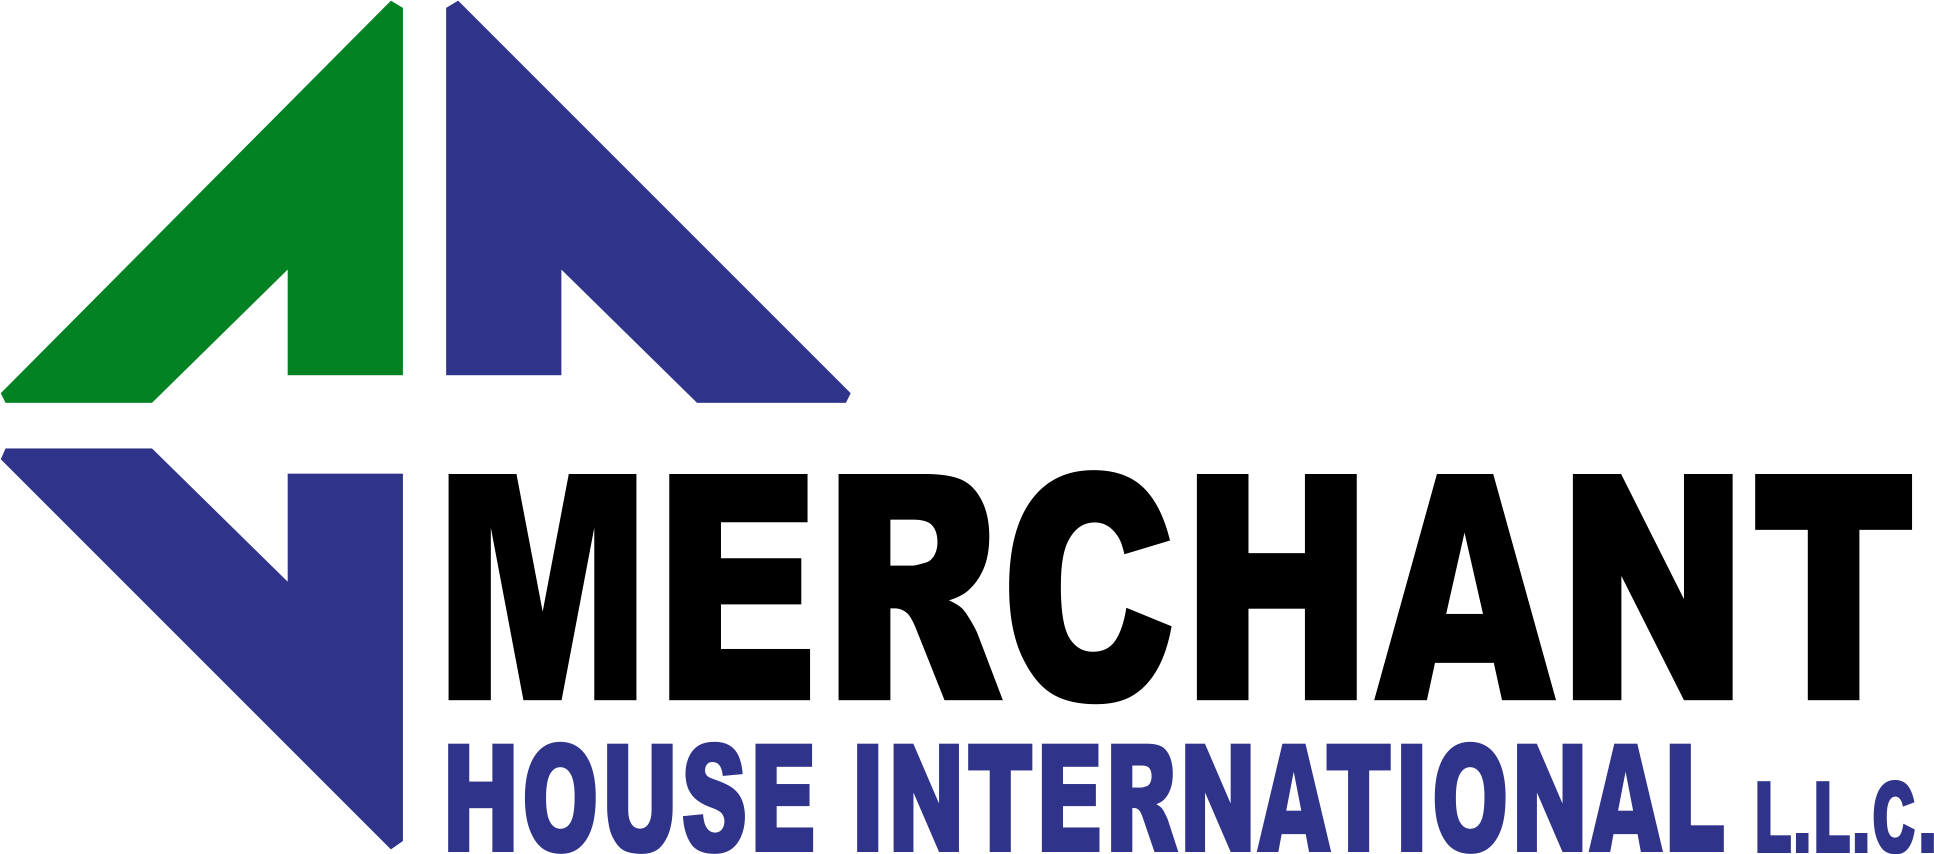 MERCHANT HOUSE INTERNATIONAL LLC